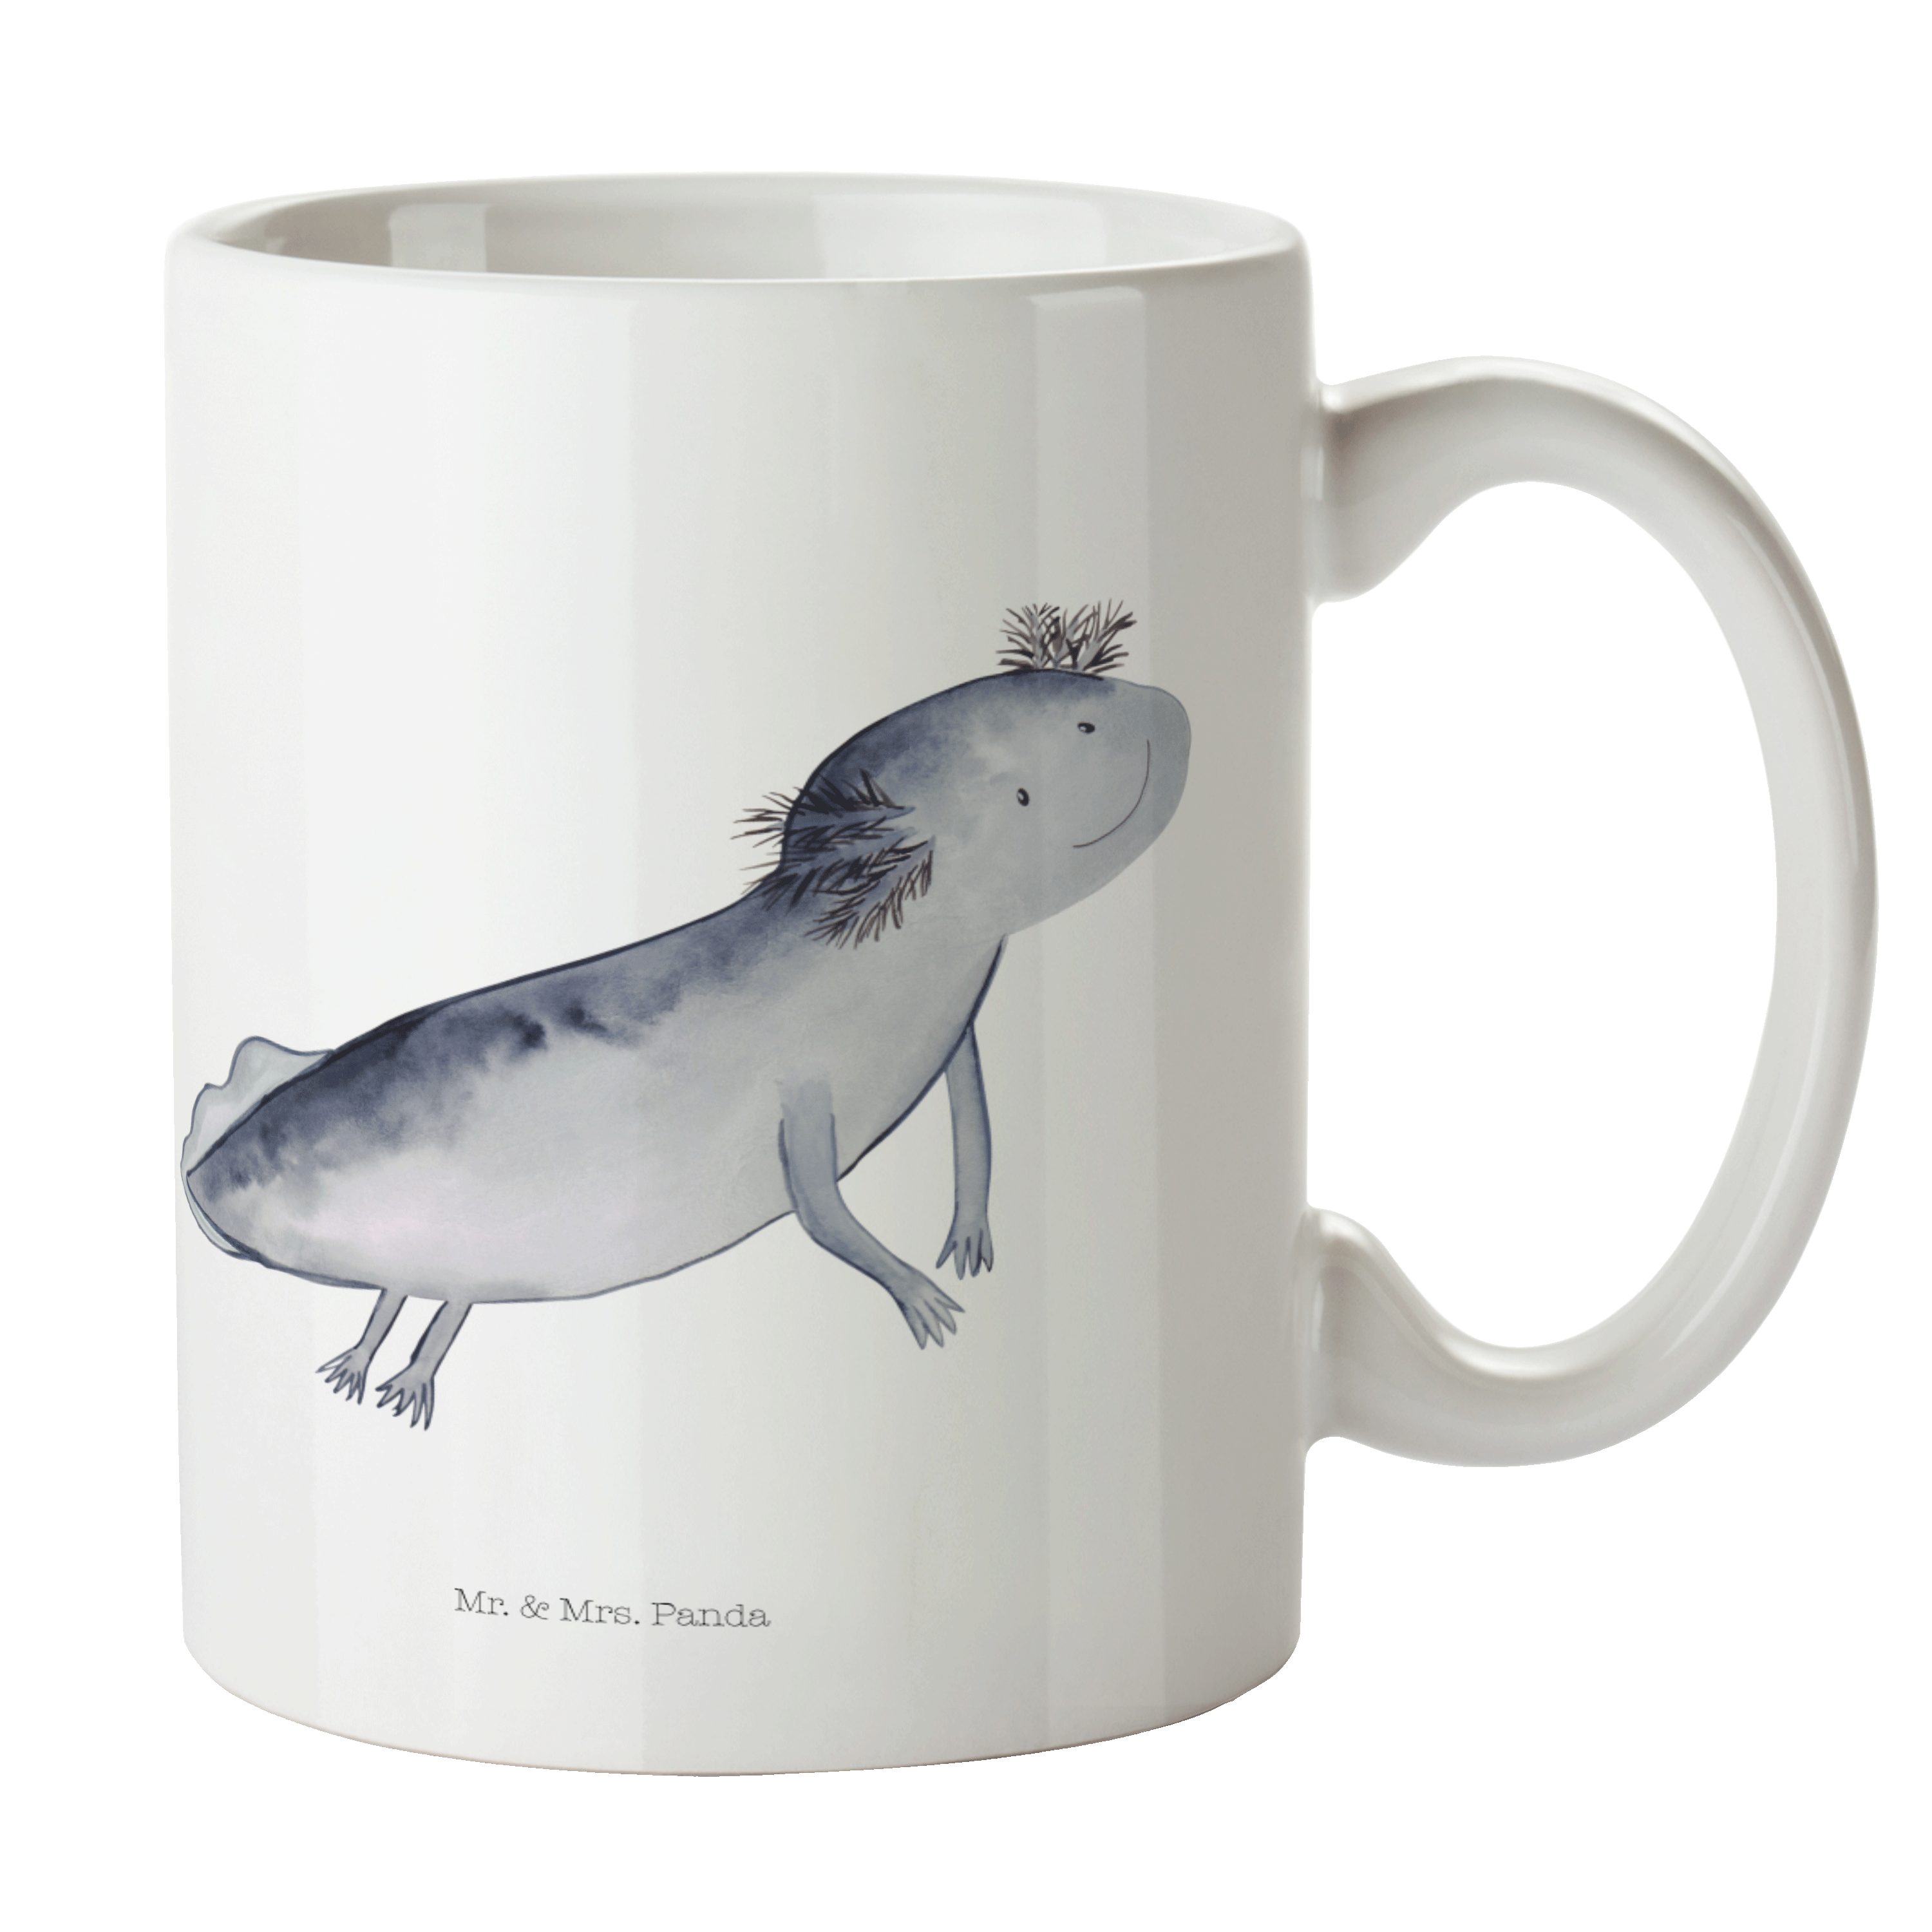 Mr. & Mrs. Panda Tasse Axolotl schwimmt - Weiß - Geschenk, Porzellantasse, Molch, Lurch, Lur, Keramik